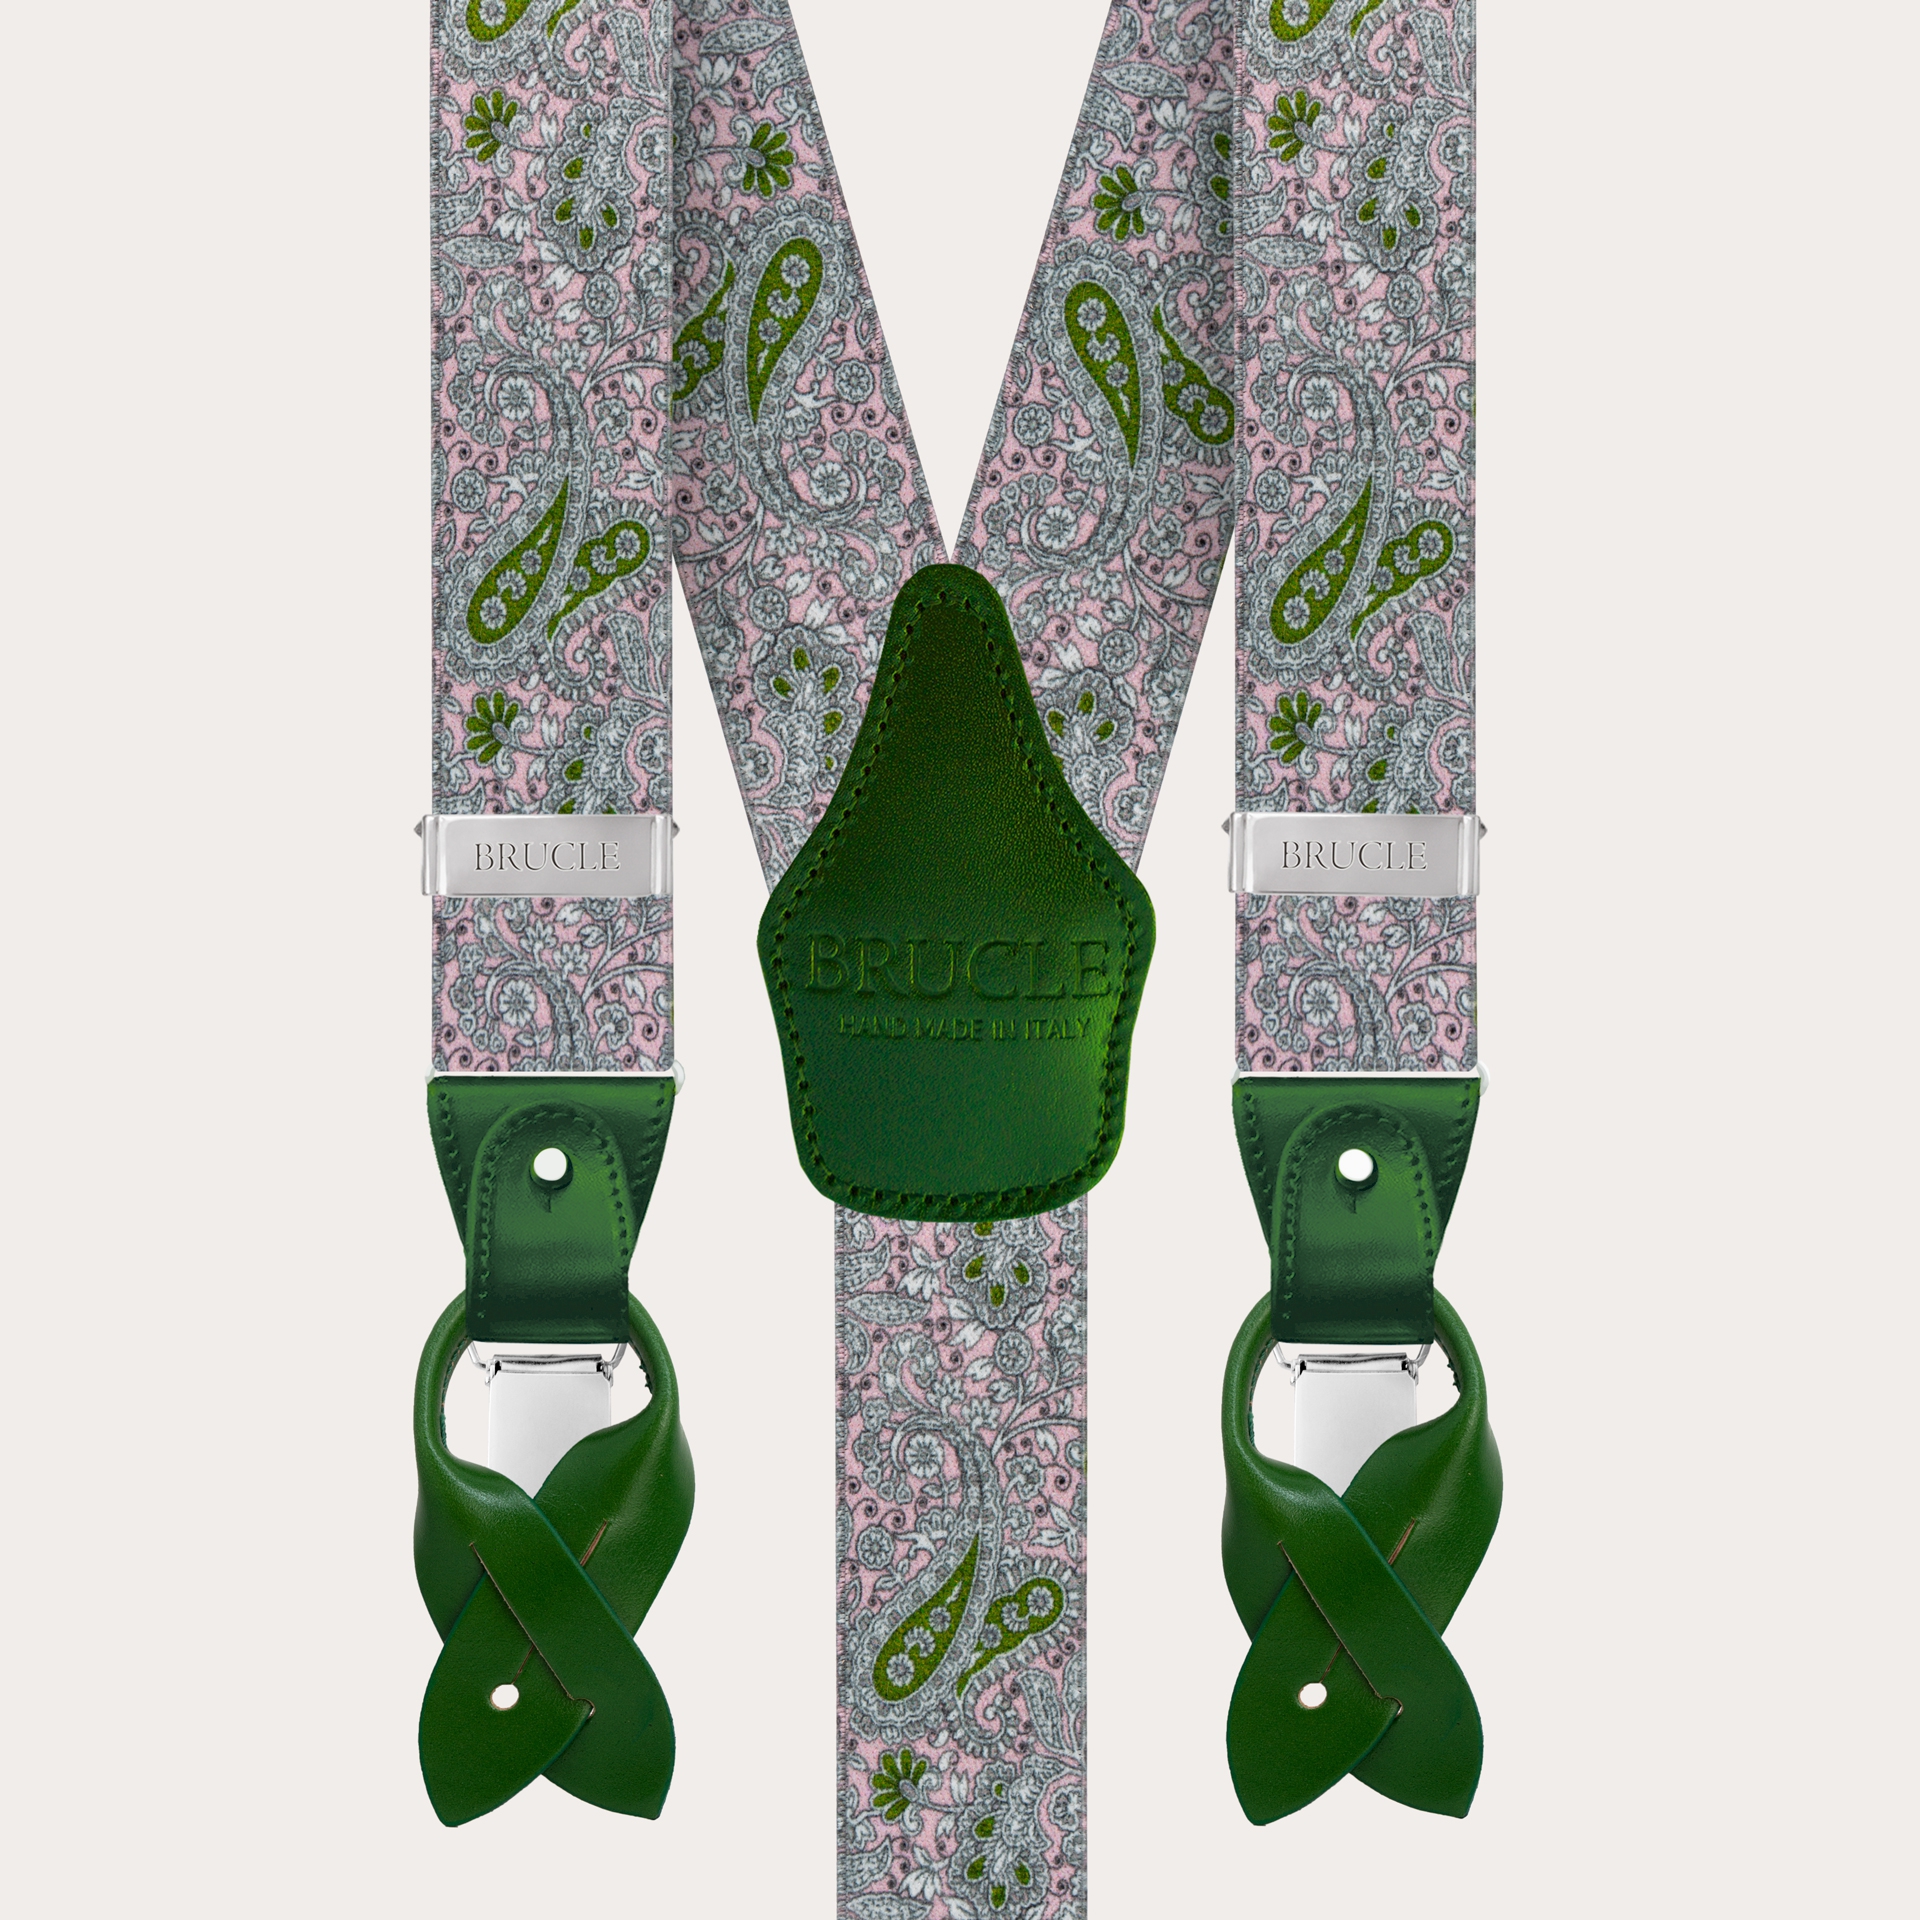 BRUCLE Elastische Hosenträger in Y-Form, rosa und grünes Kaschmirmuster